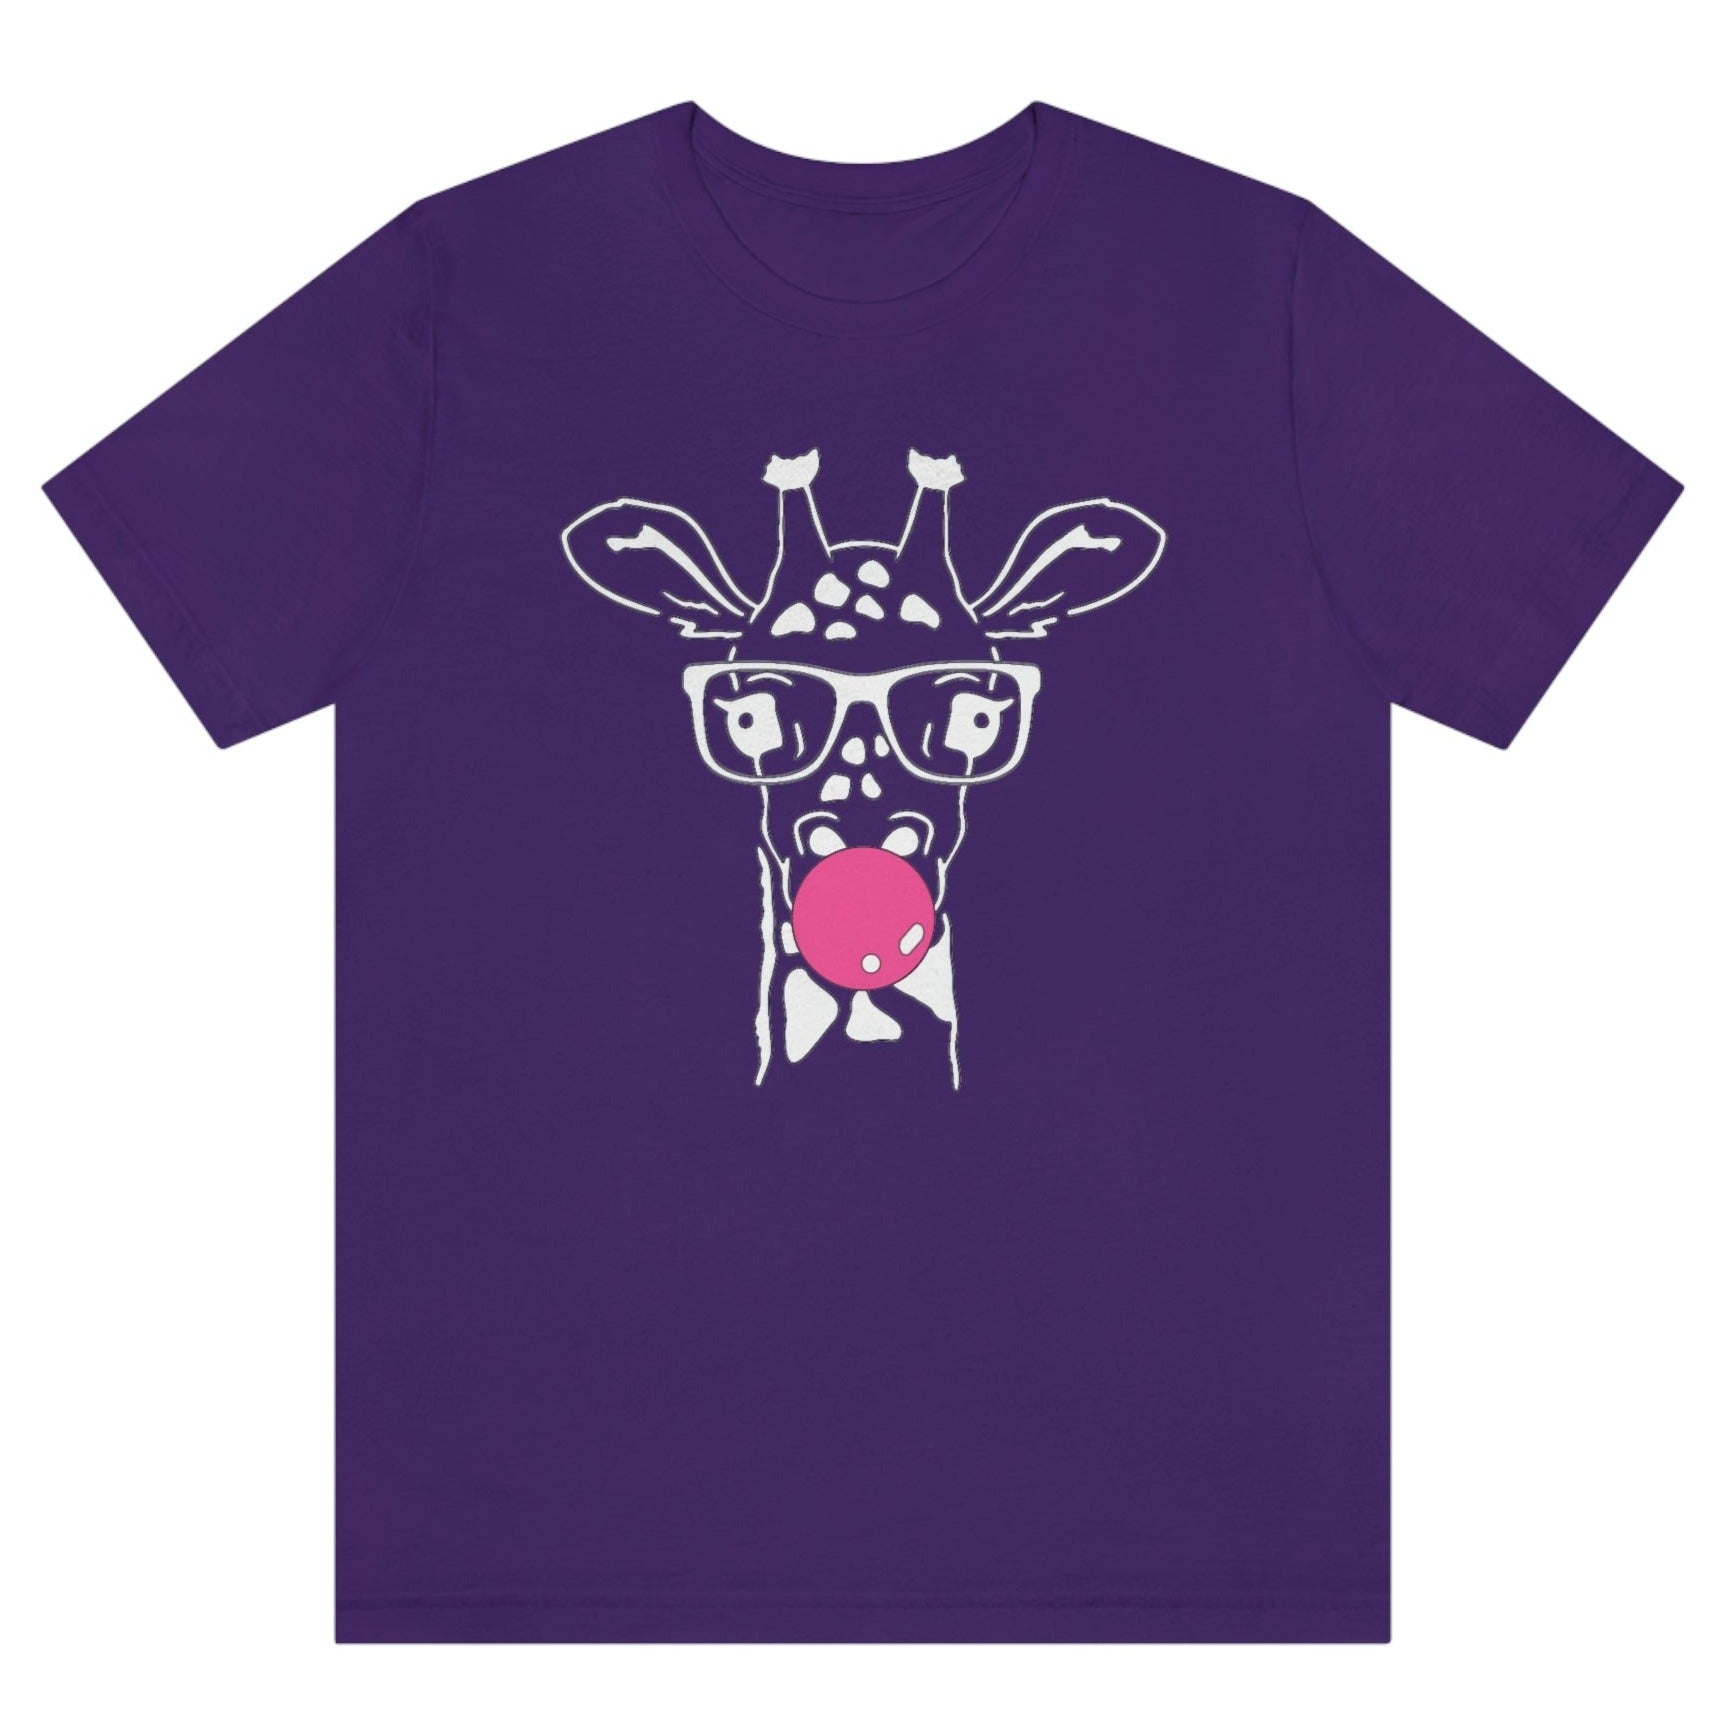 bubblegum-giraffe-team-purple-t-shirt-womens-style